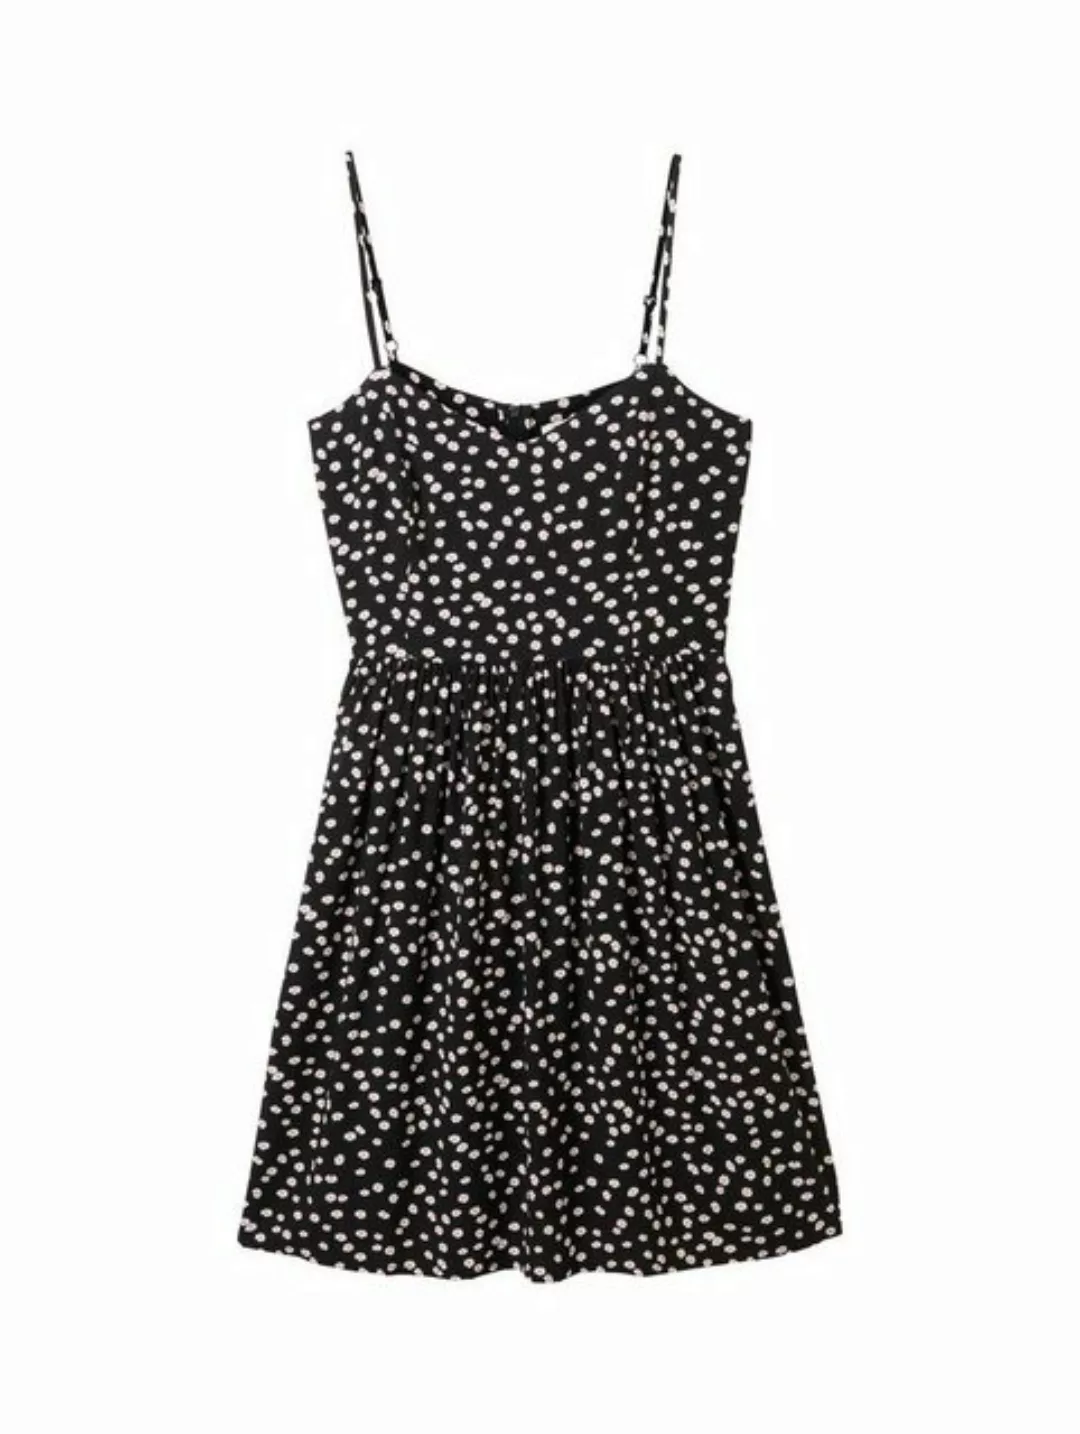 TOM TAILOR Denim Sommerkleid printed strap mini dress, black flower minimal günstig online kaufen